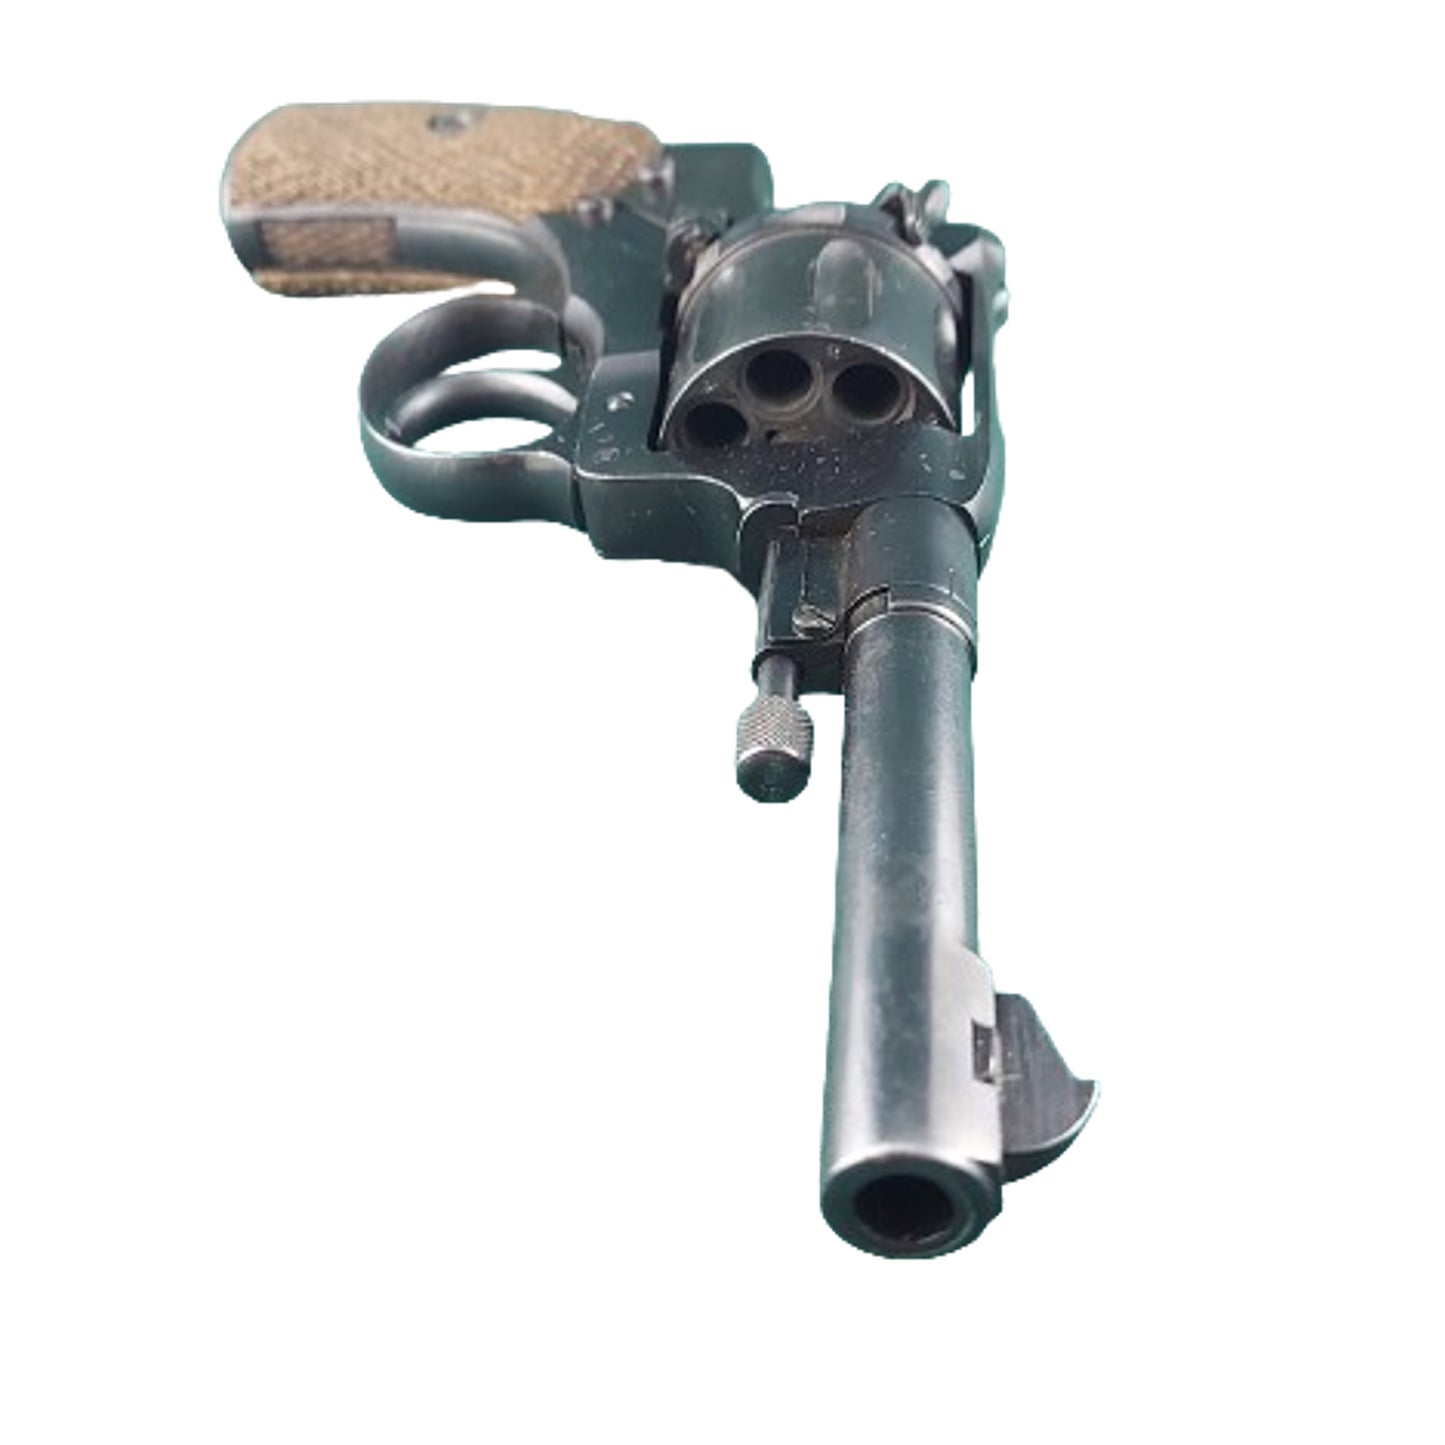 Deactivated WW2 Russian Nagant Service Revolver 1939